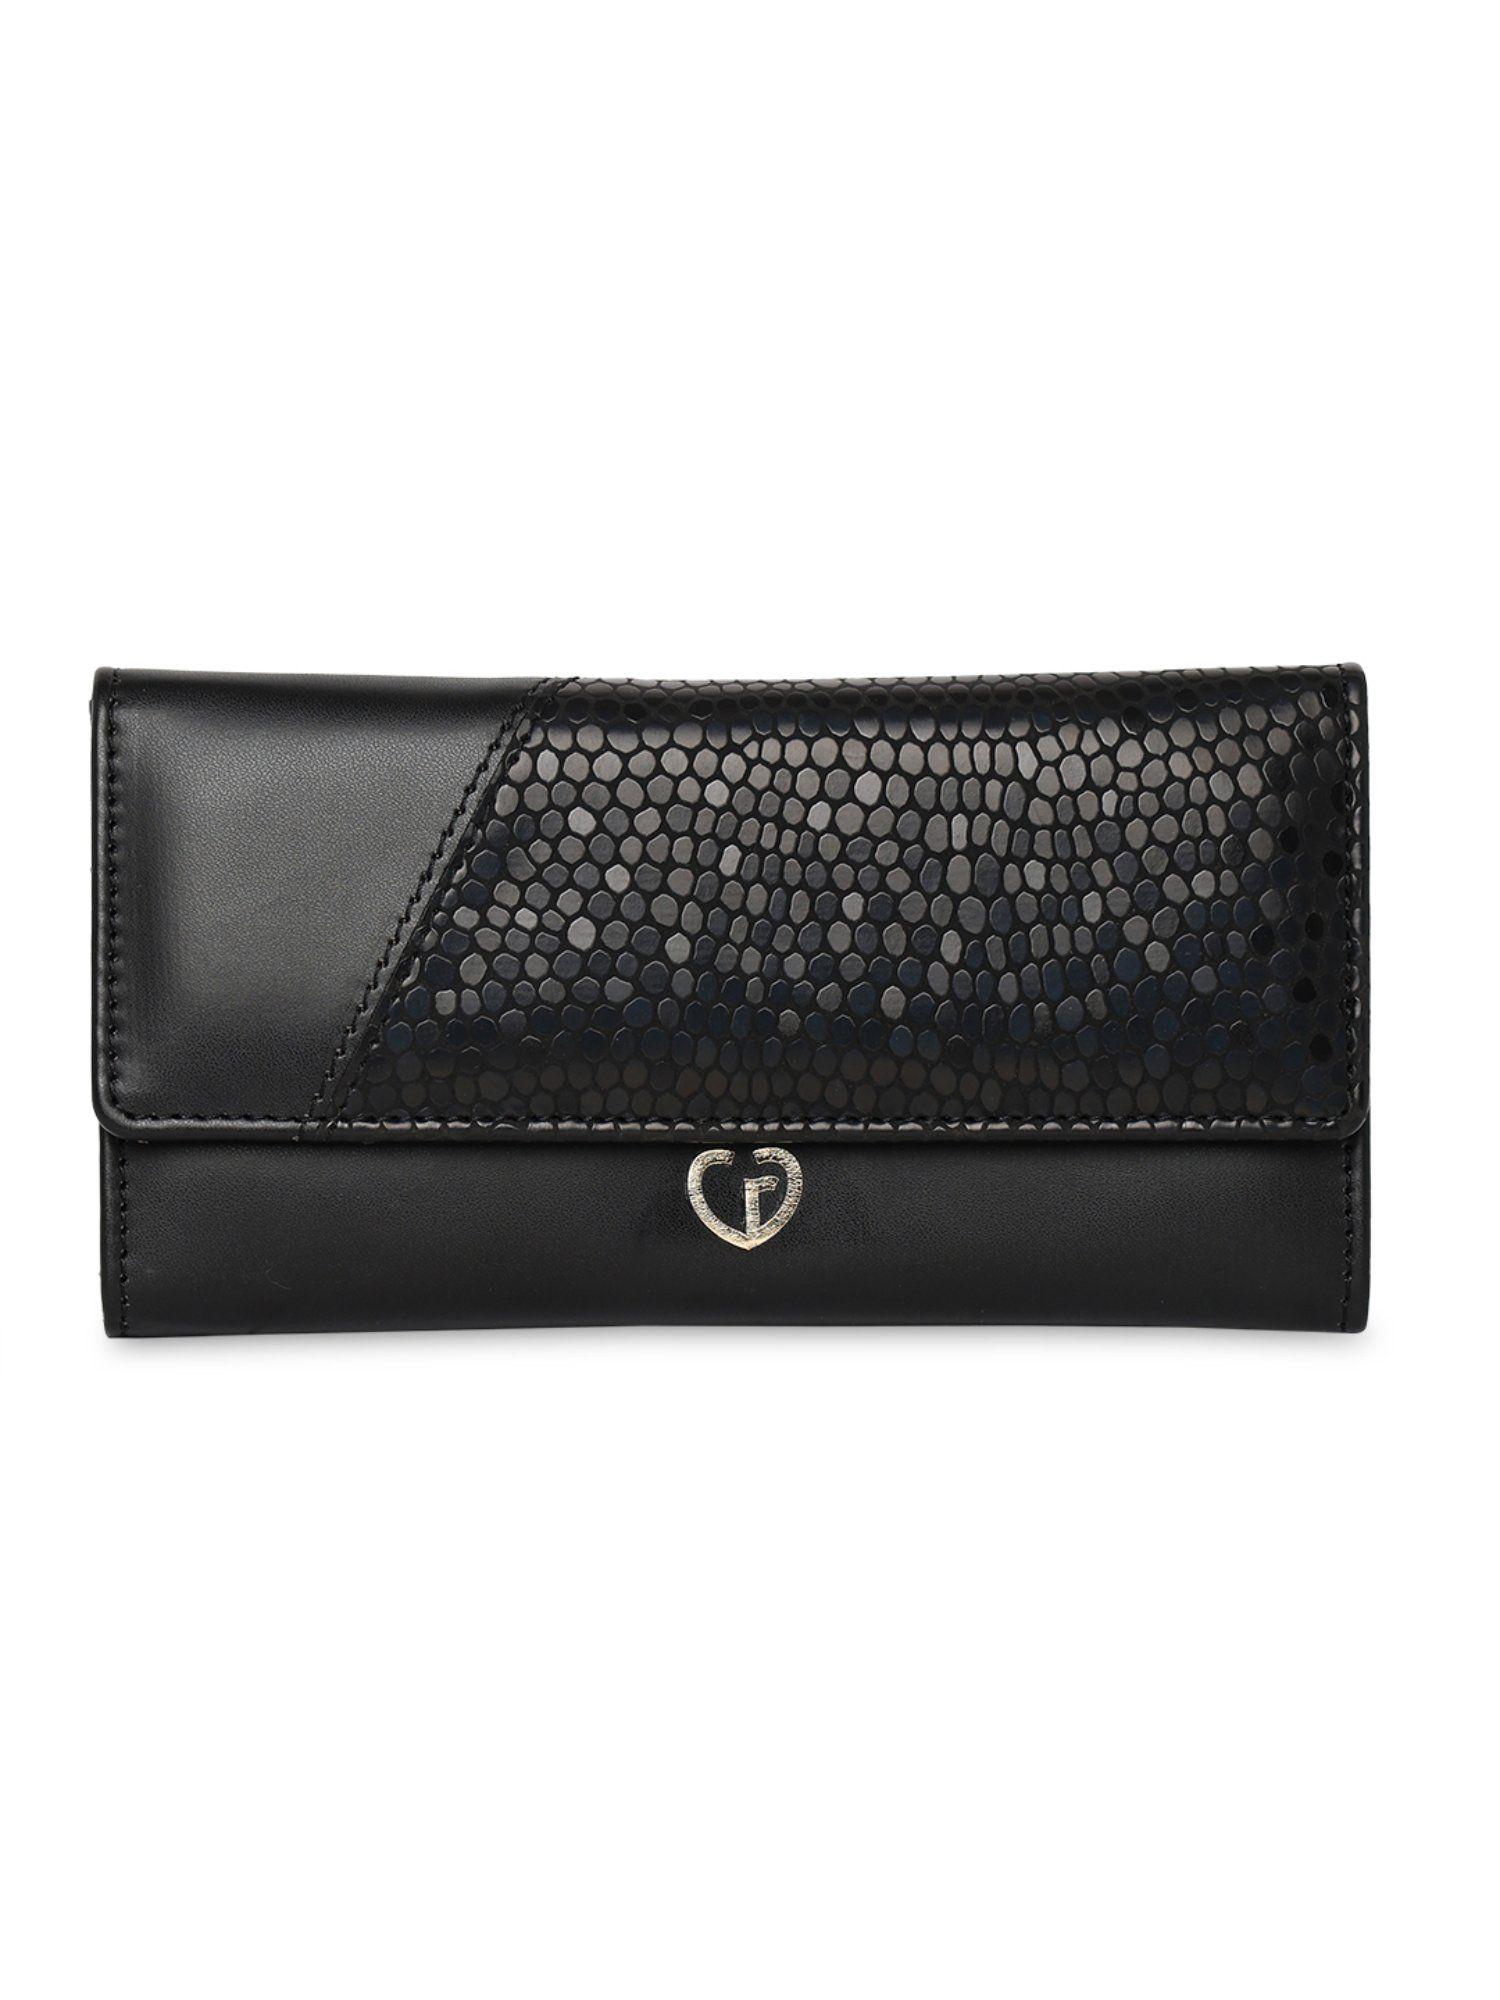 pernille flopover black wallet large